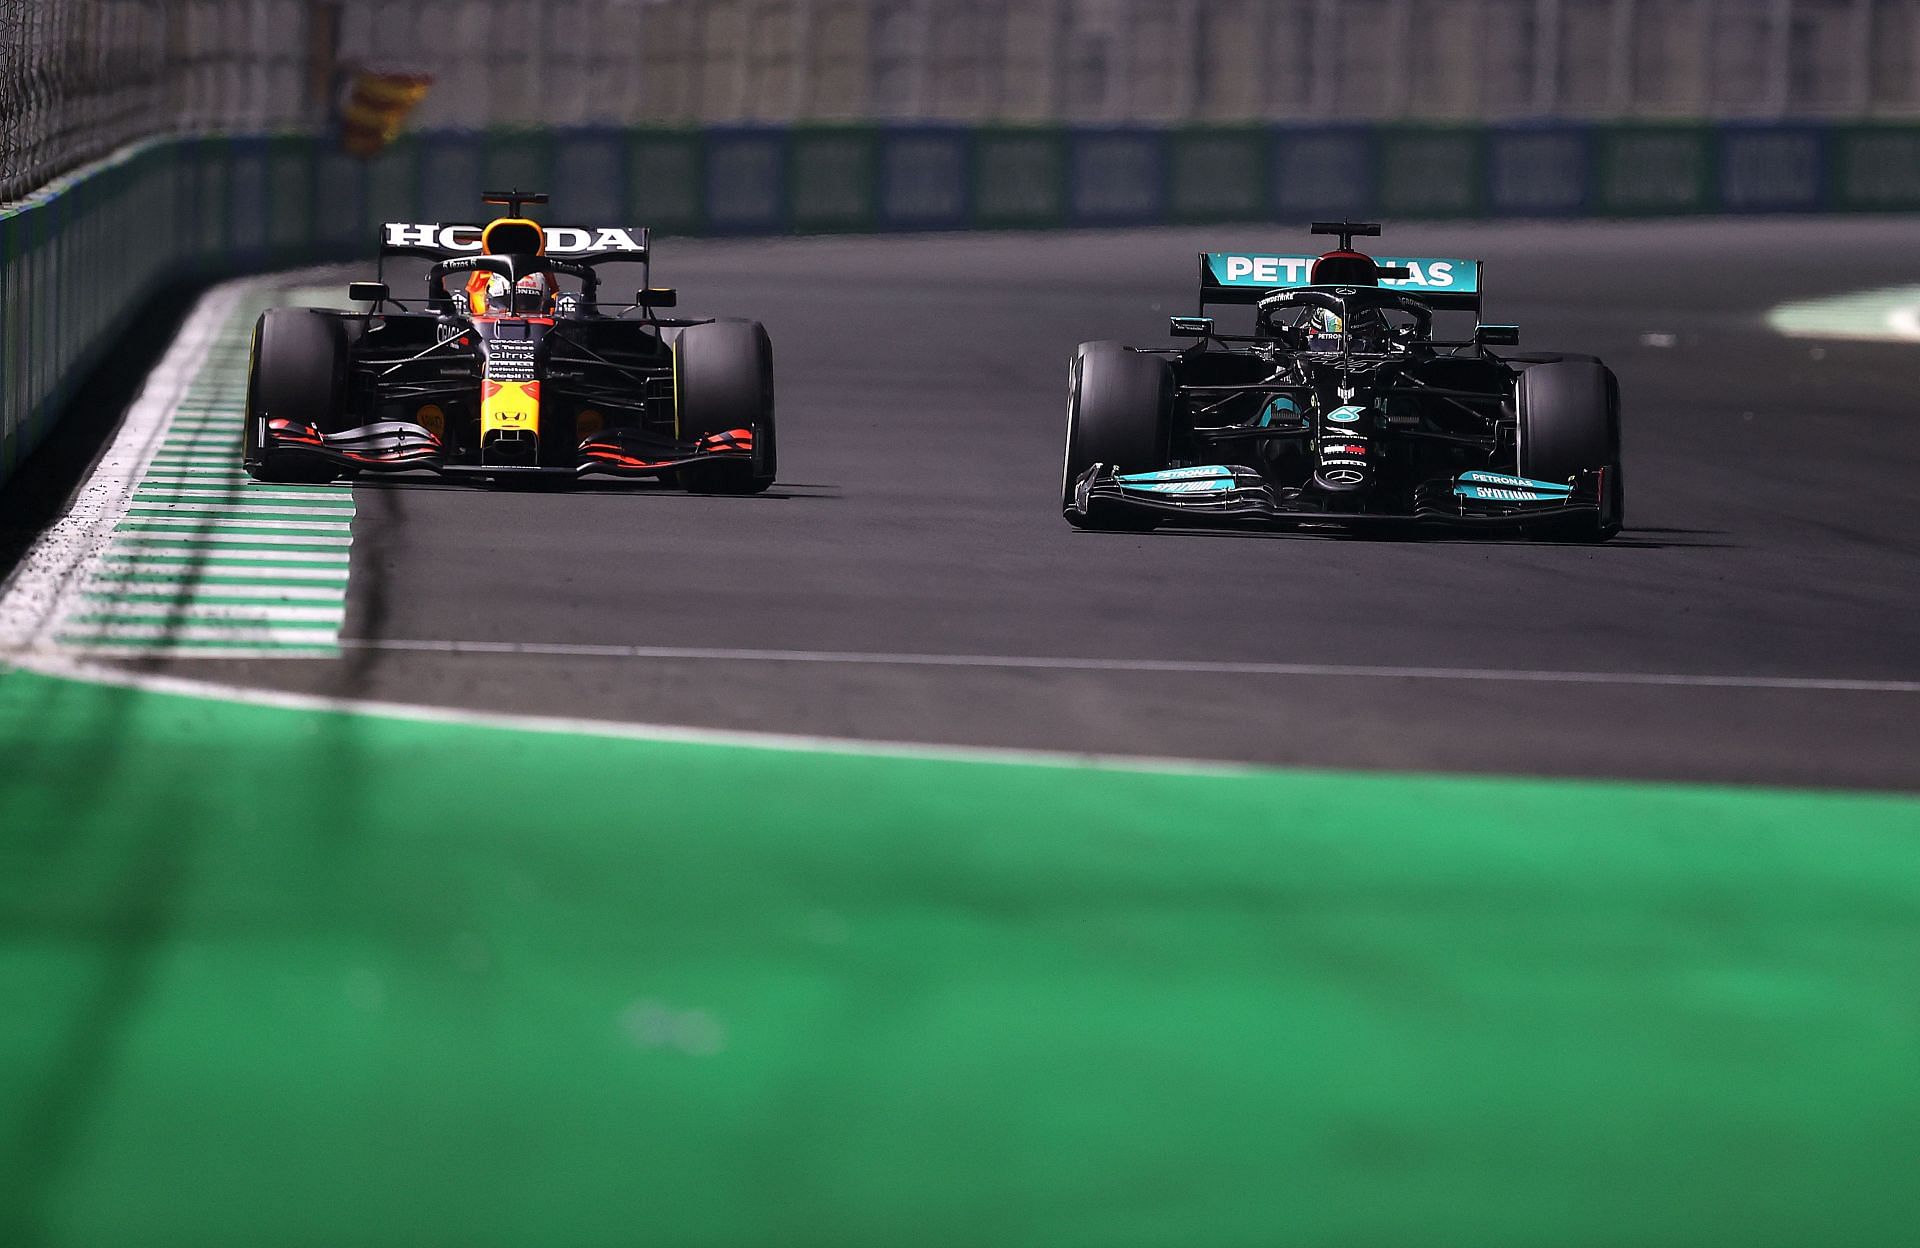 F1 Grand Prix of Saudi Arabia - Lewis Hamilton and Max Verstappen race towards a left-hander.